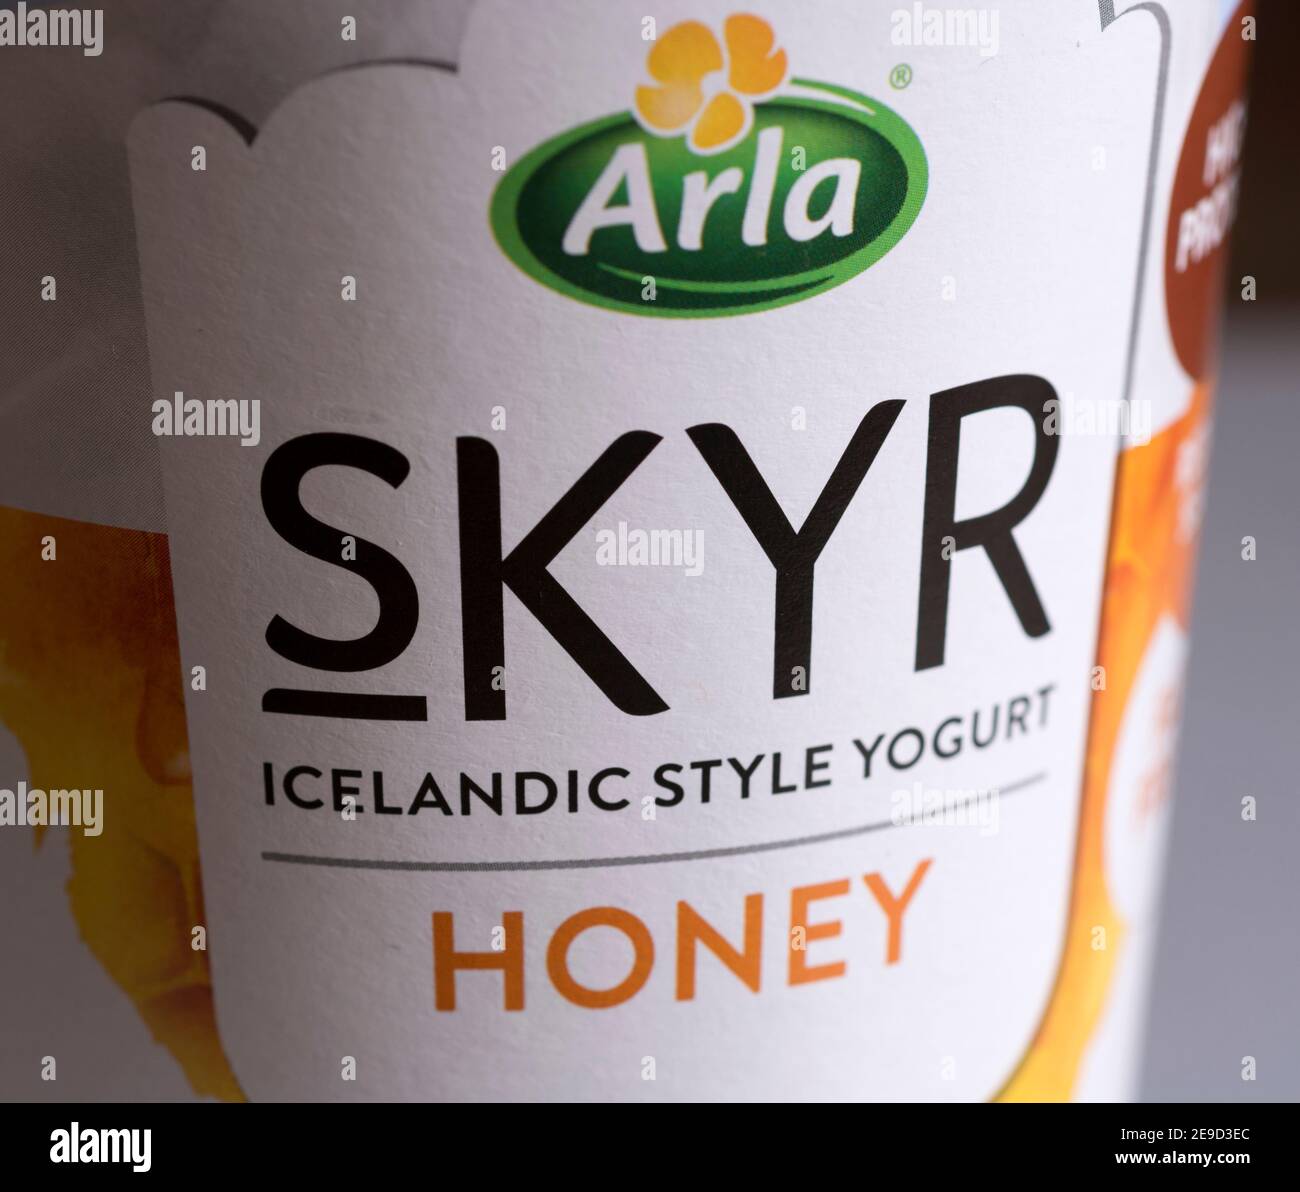 A pot of Arla Skyr Icelandic style yoghurt Stock Photo - Alamy